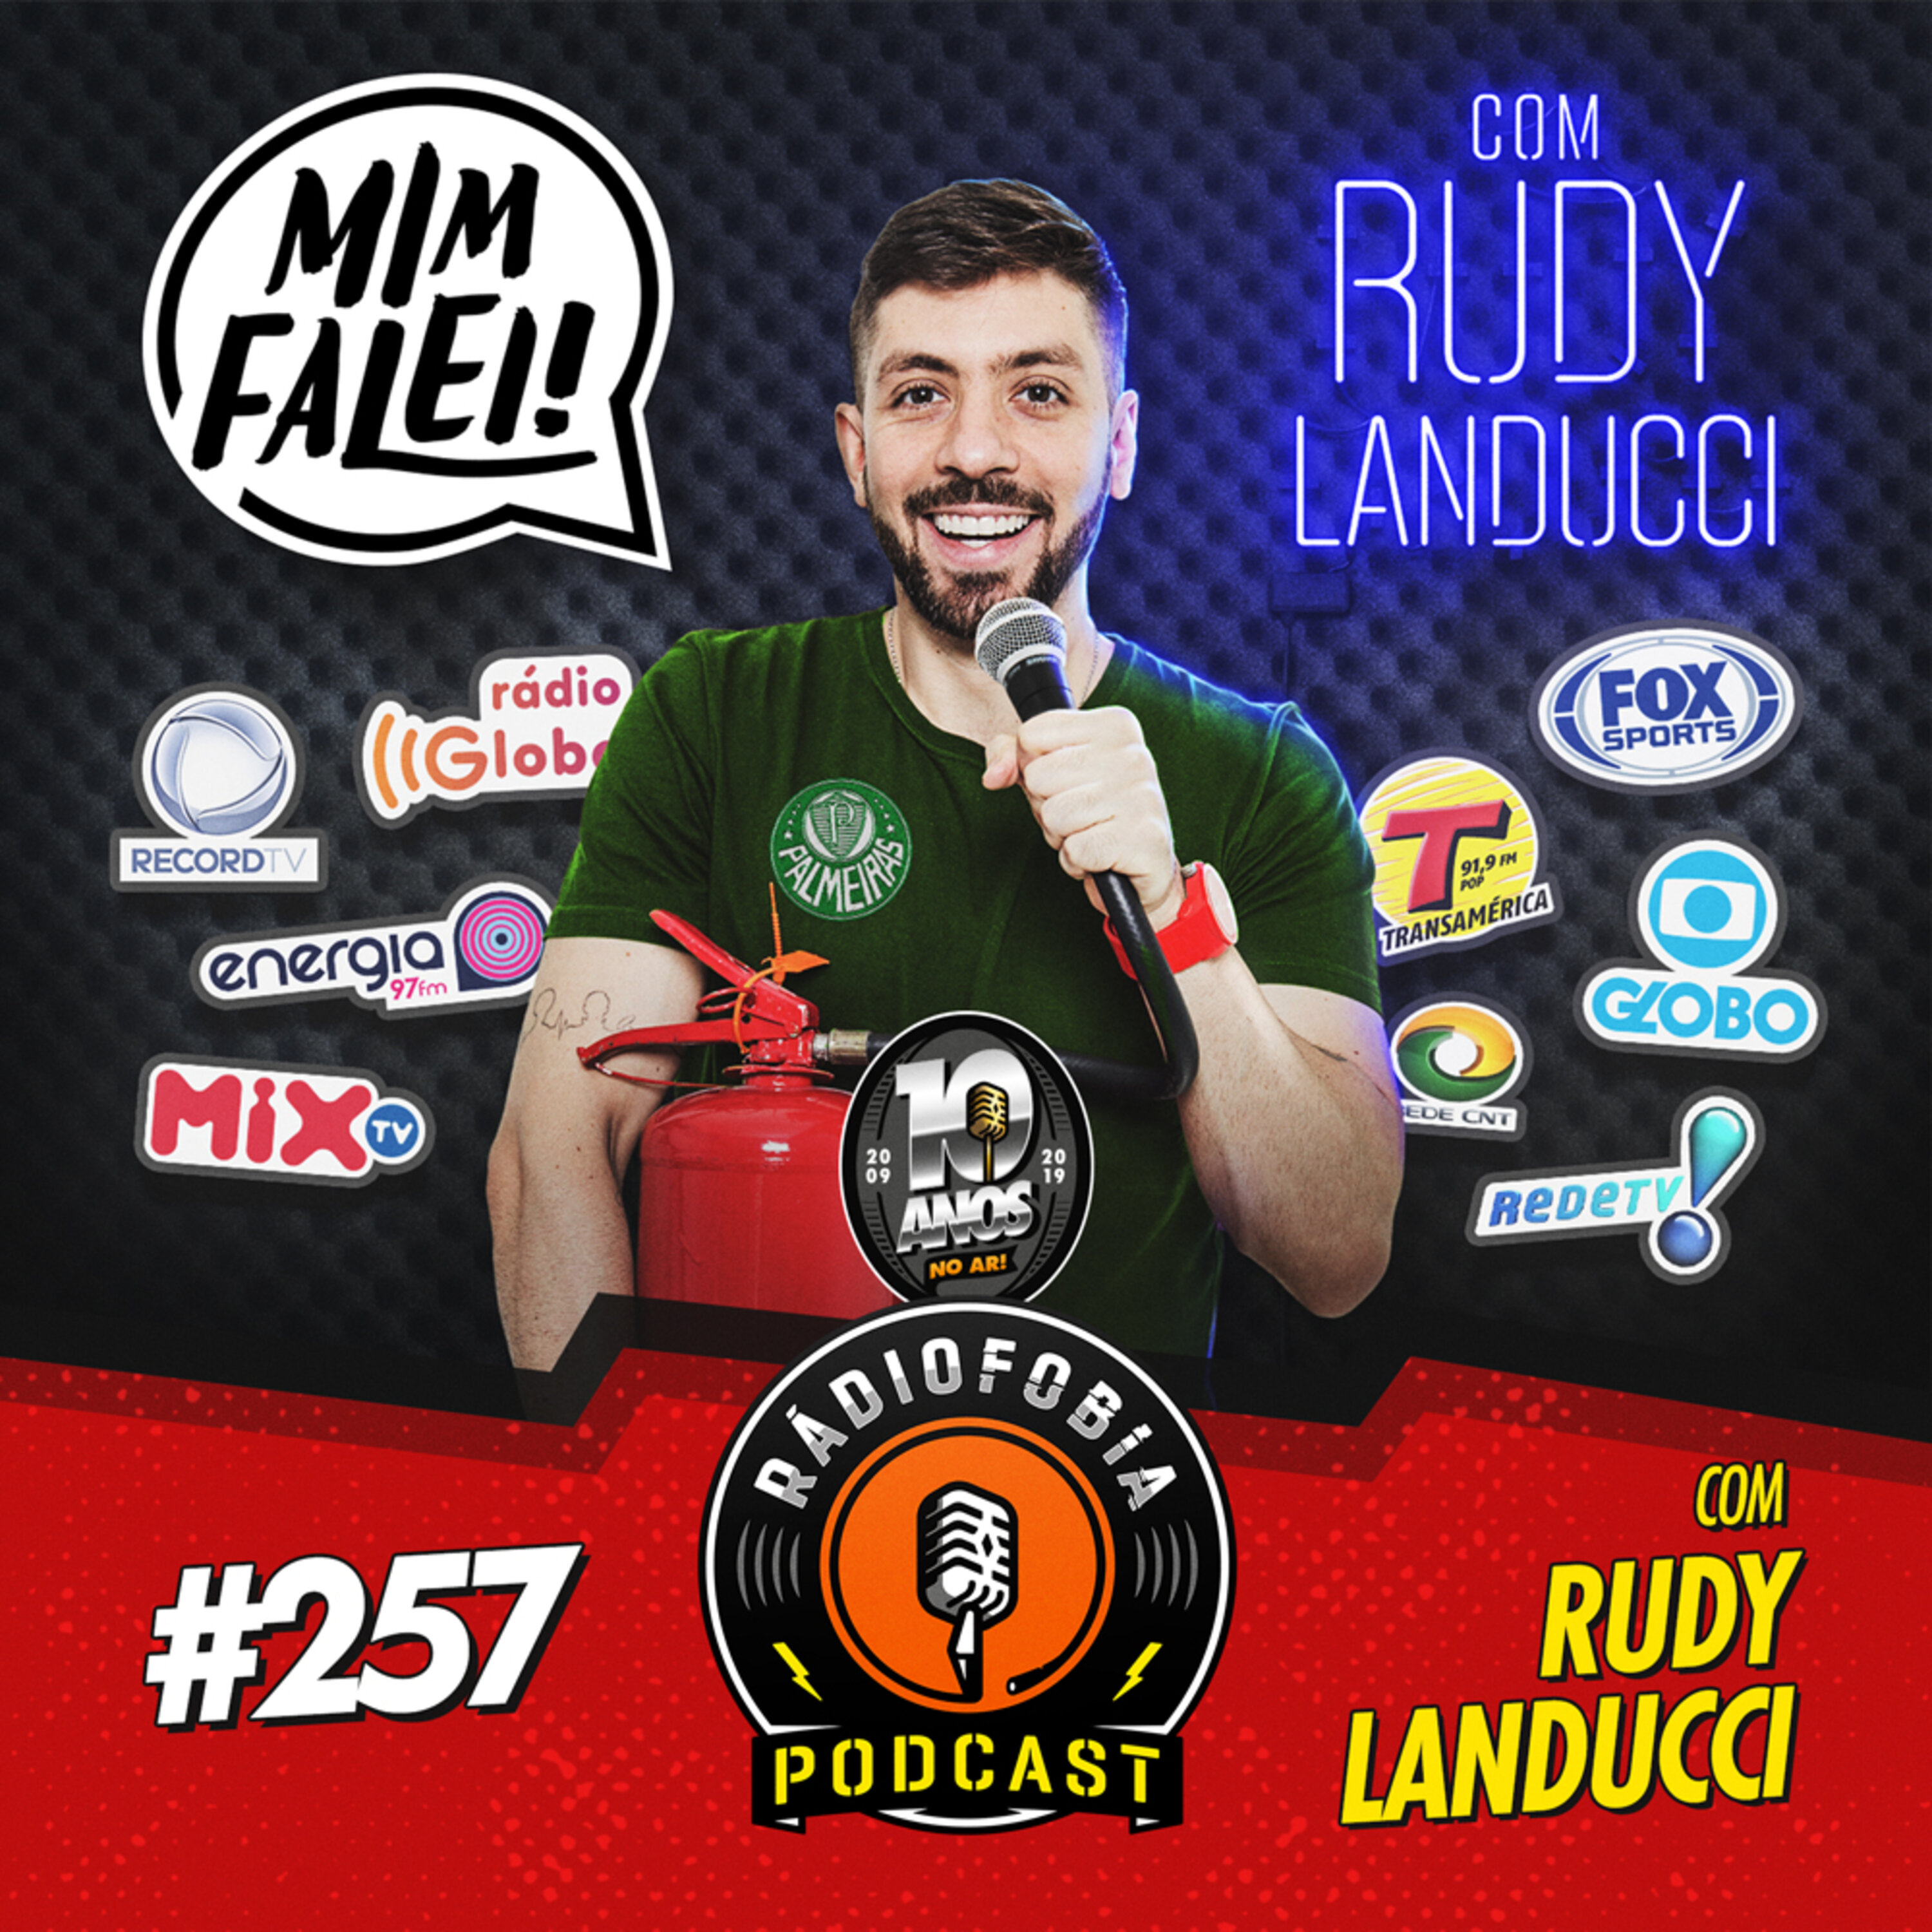 RADIOFOBIA 257 – com Rudy Landucci